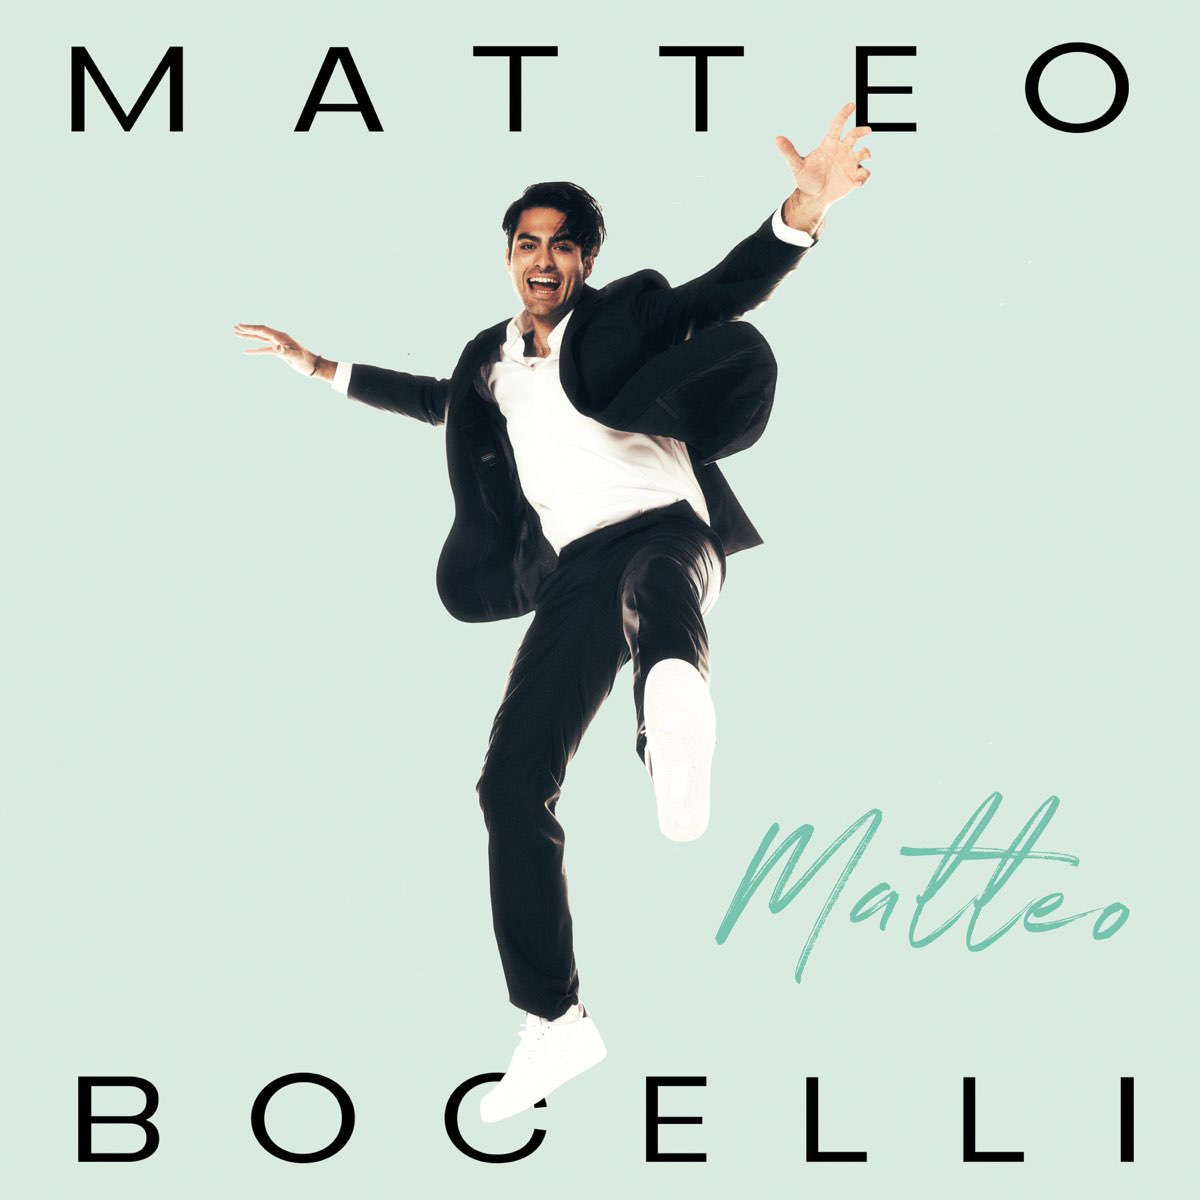 Matteo – Album par Matteo Bocelli – Apple Music